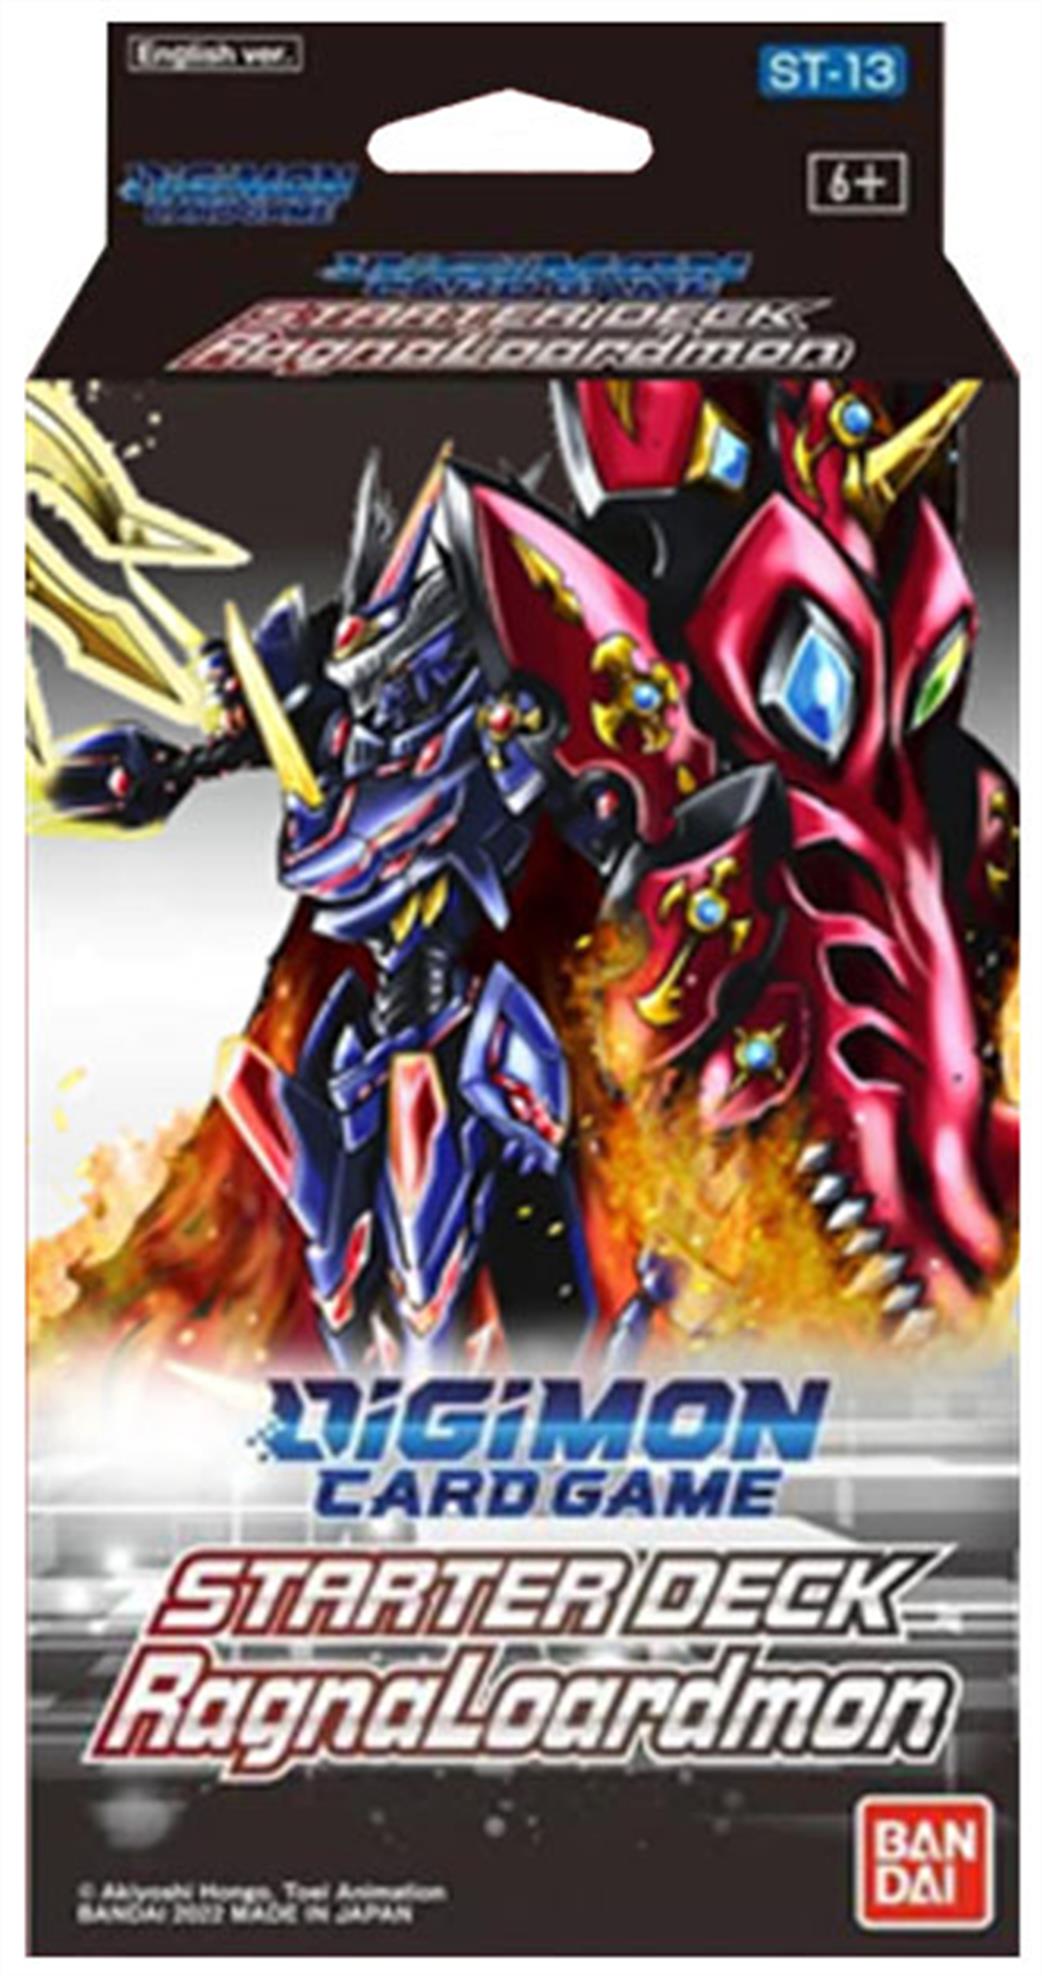 Bandai  ST-13 Digimon RagnaLoardmon Starter Deck